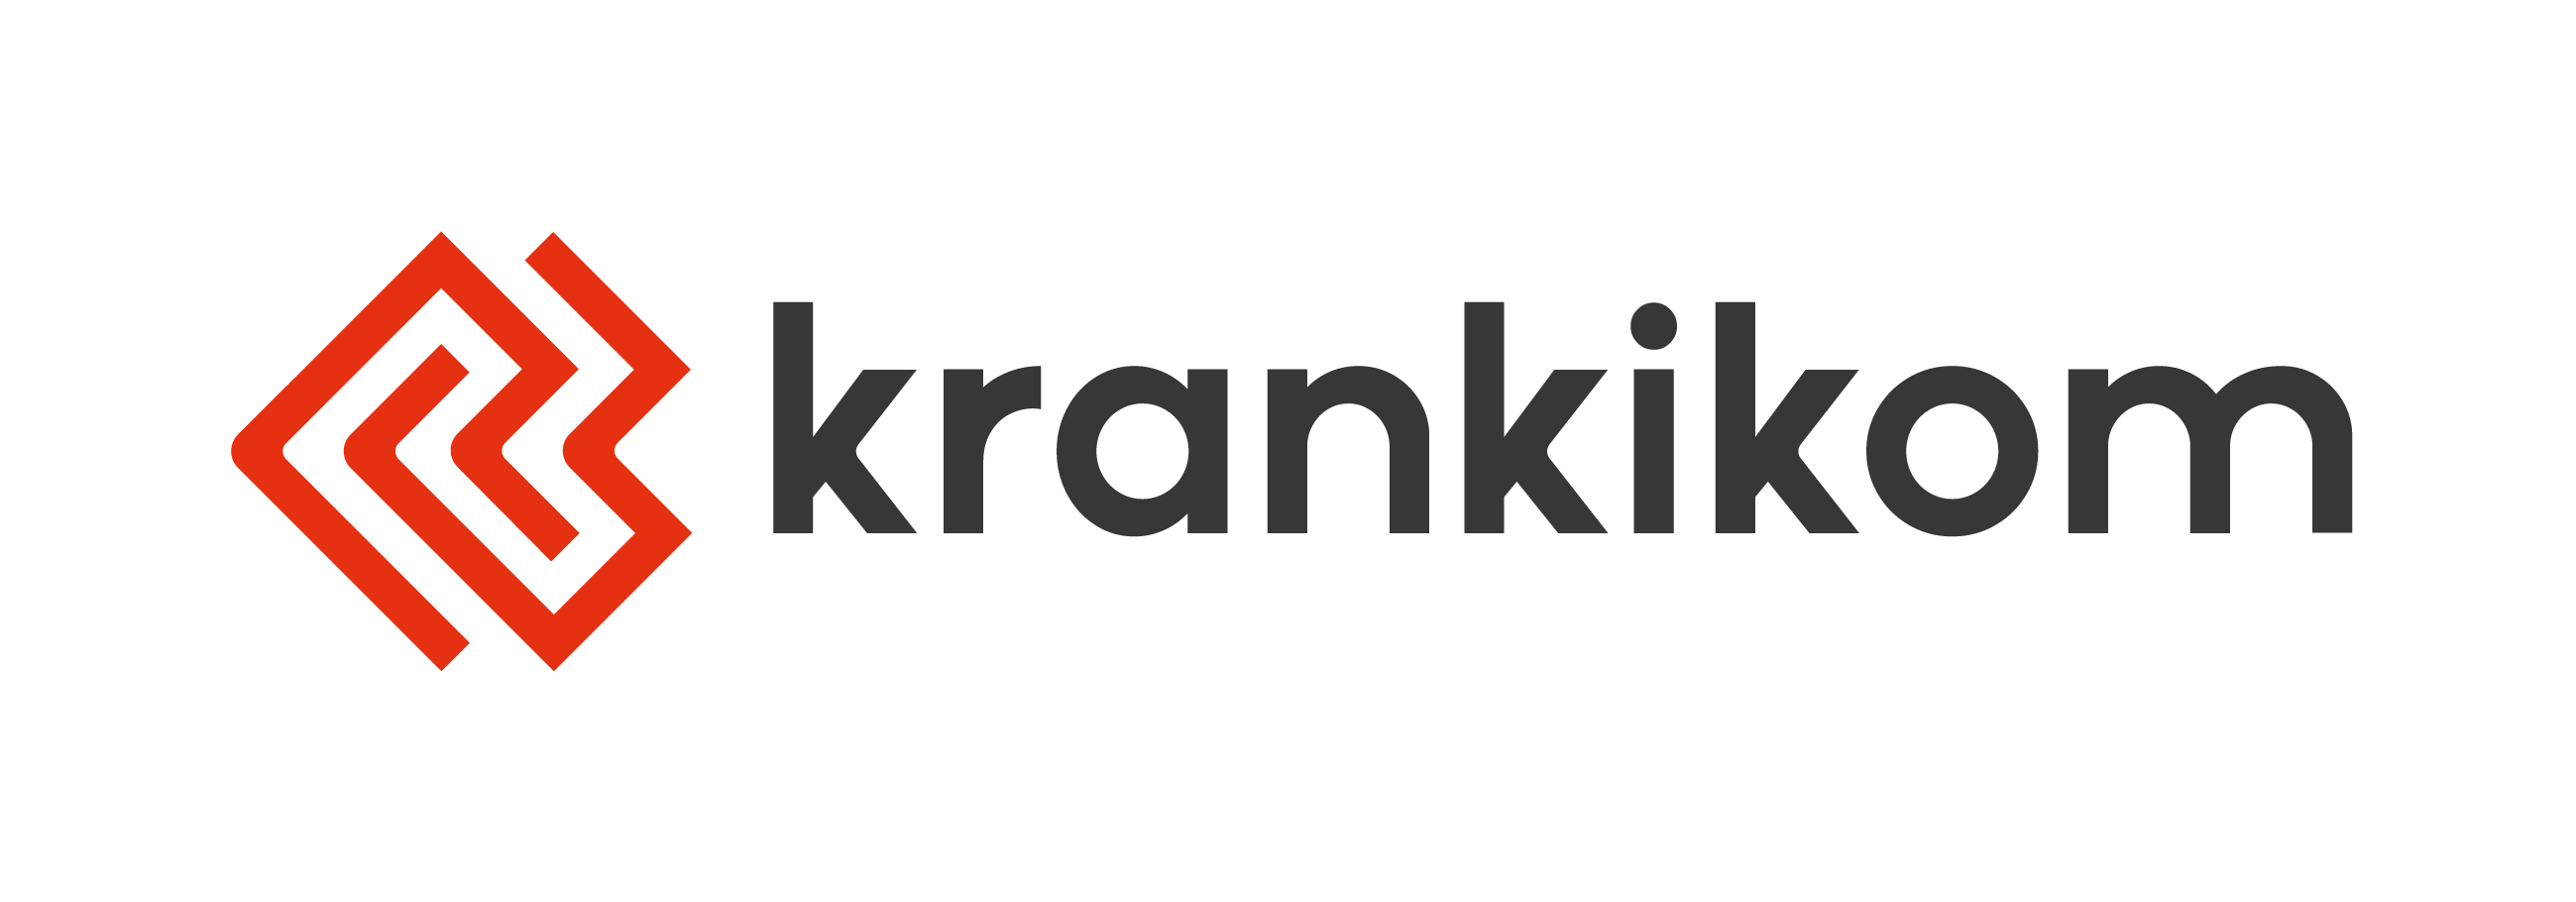 Krankikom GmbH logo